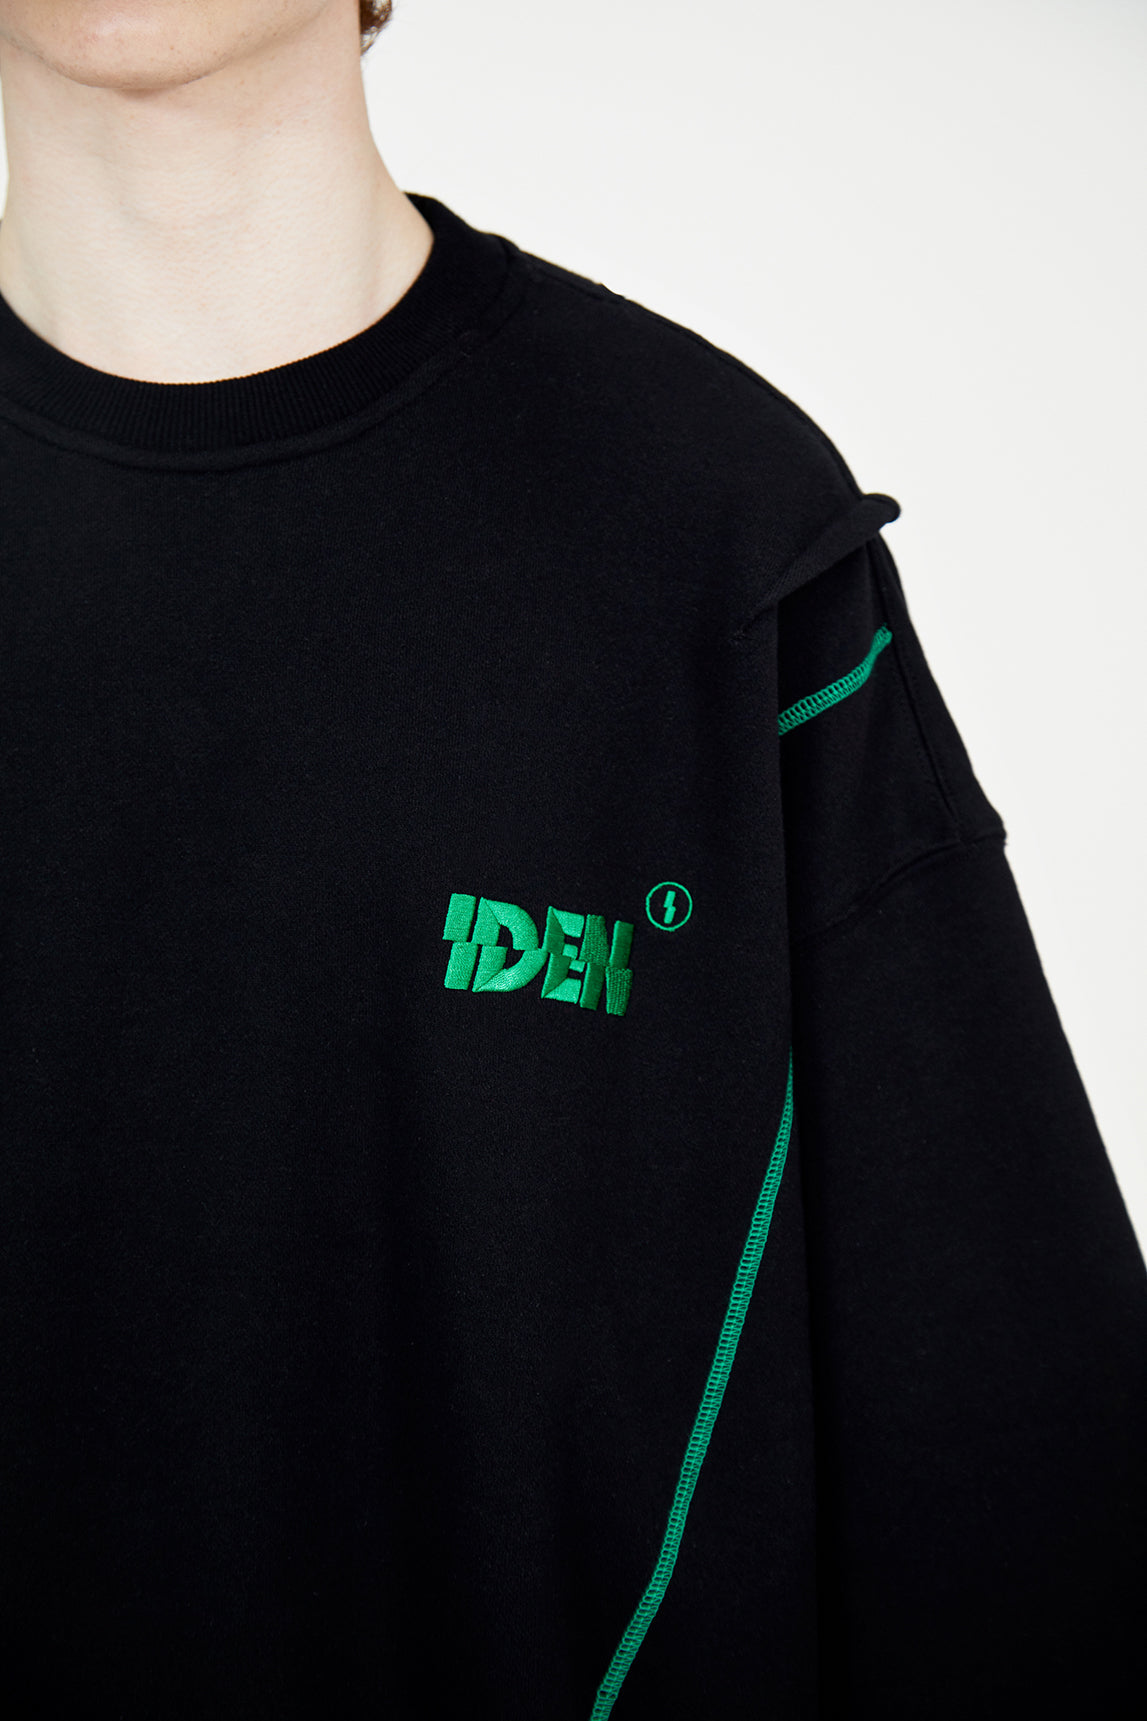 IDEN needlepoint sweatshirts (Black)